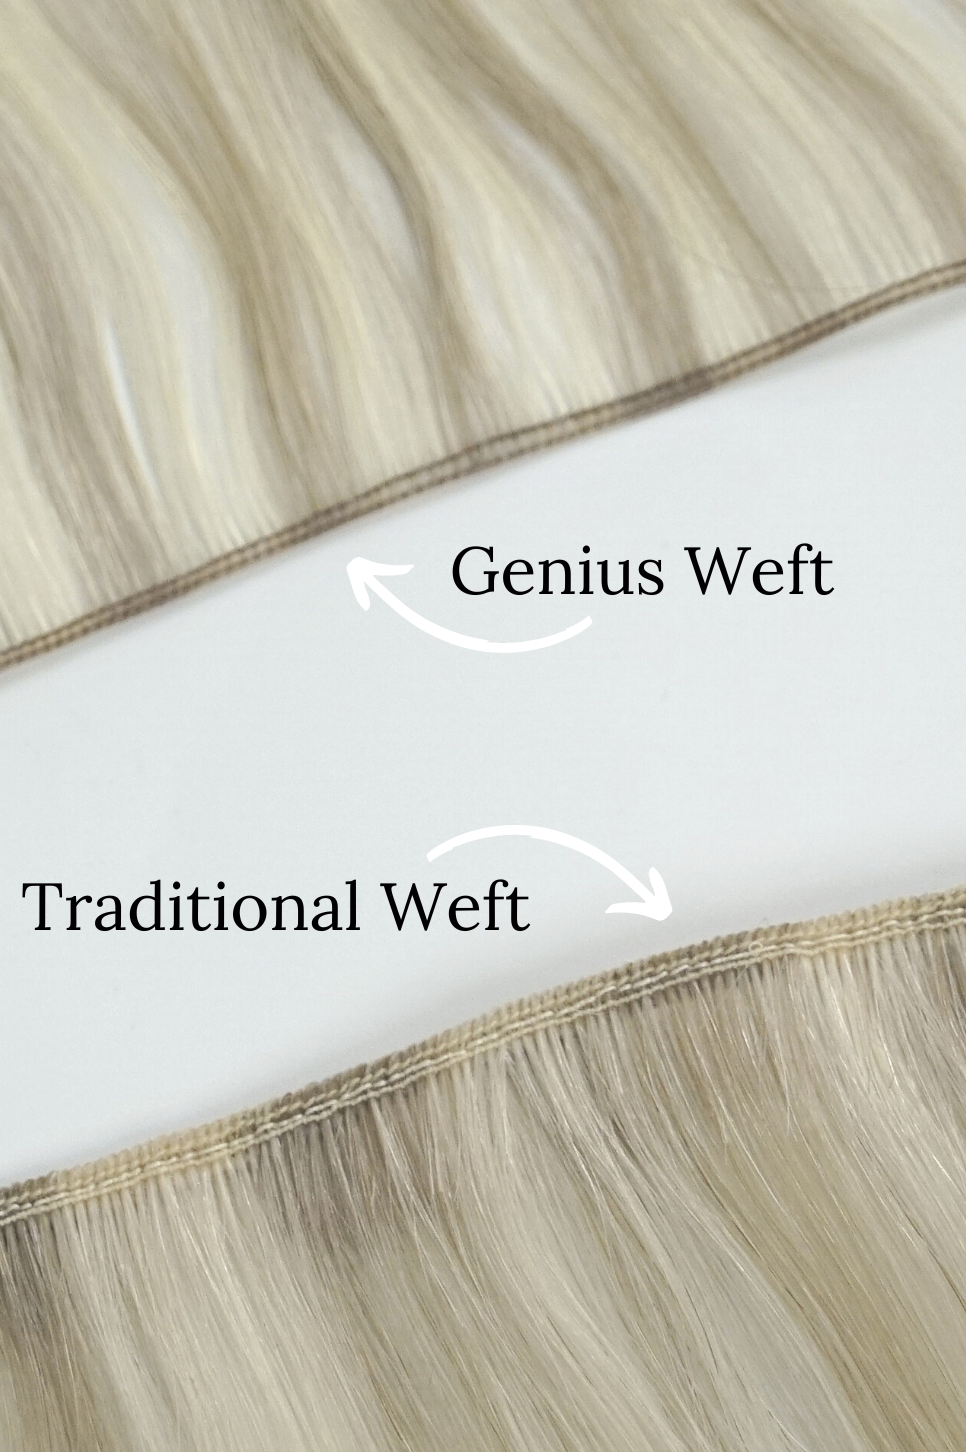 #18/60 Pearl Ash Blonde Highlights Genius Hair Weft Extensions